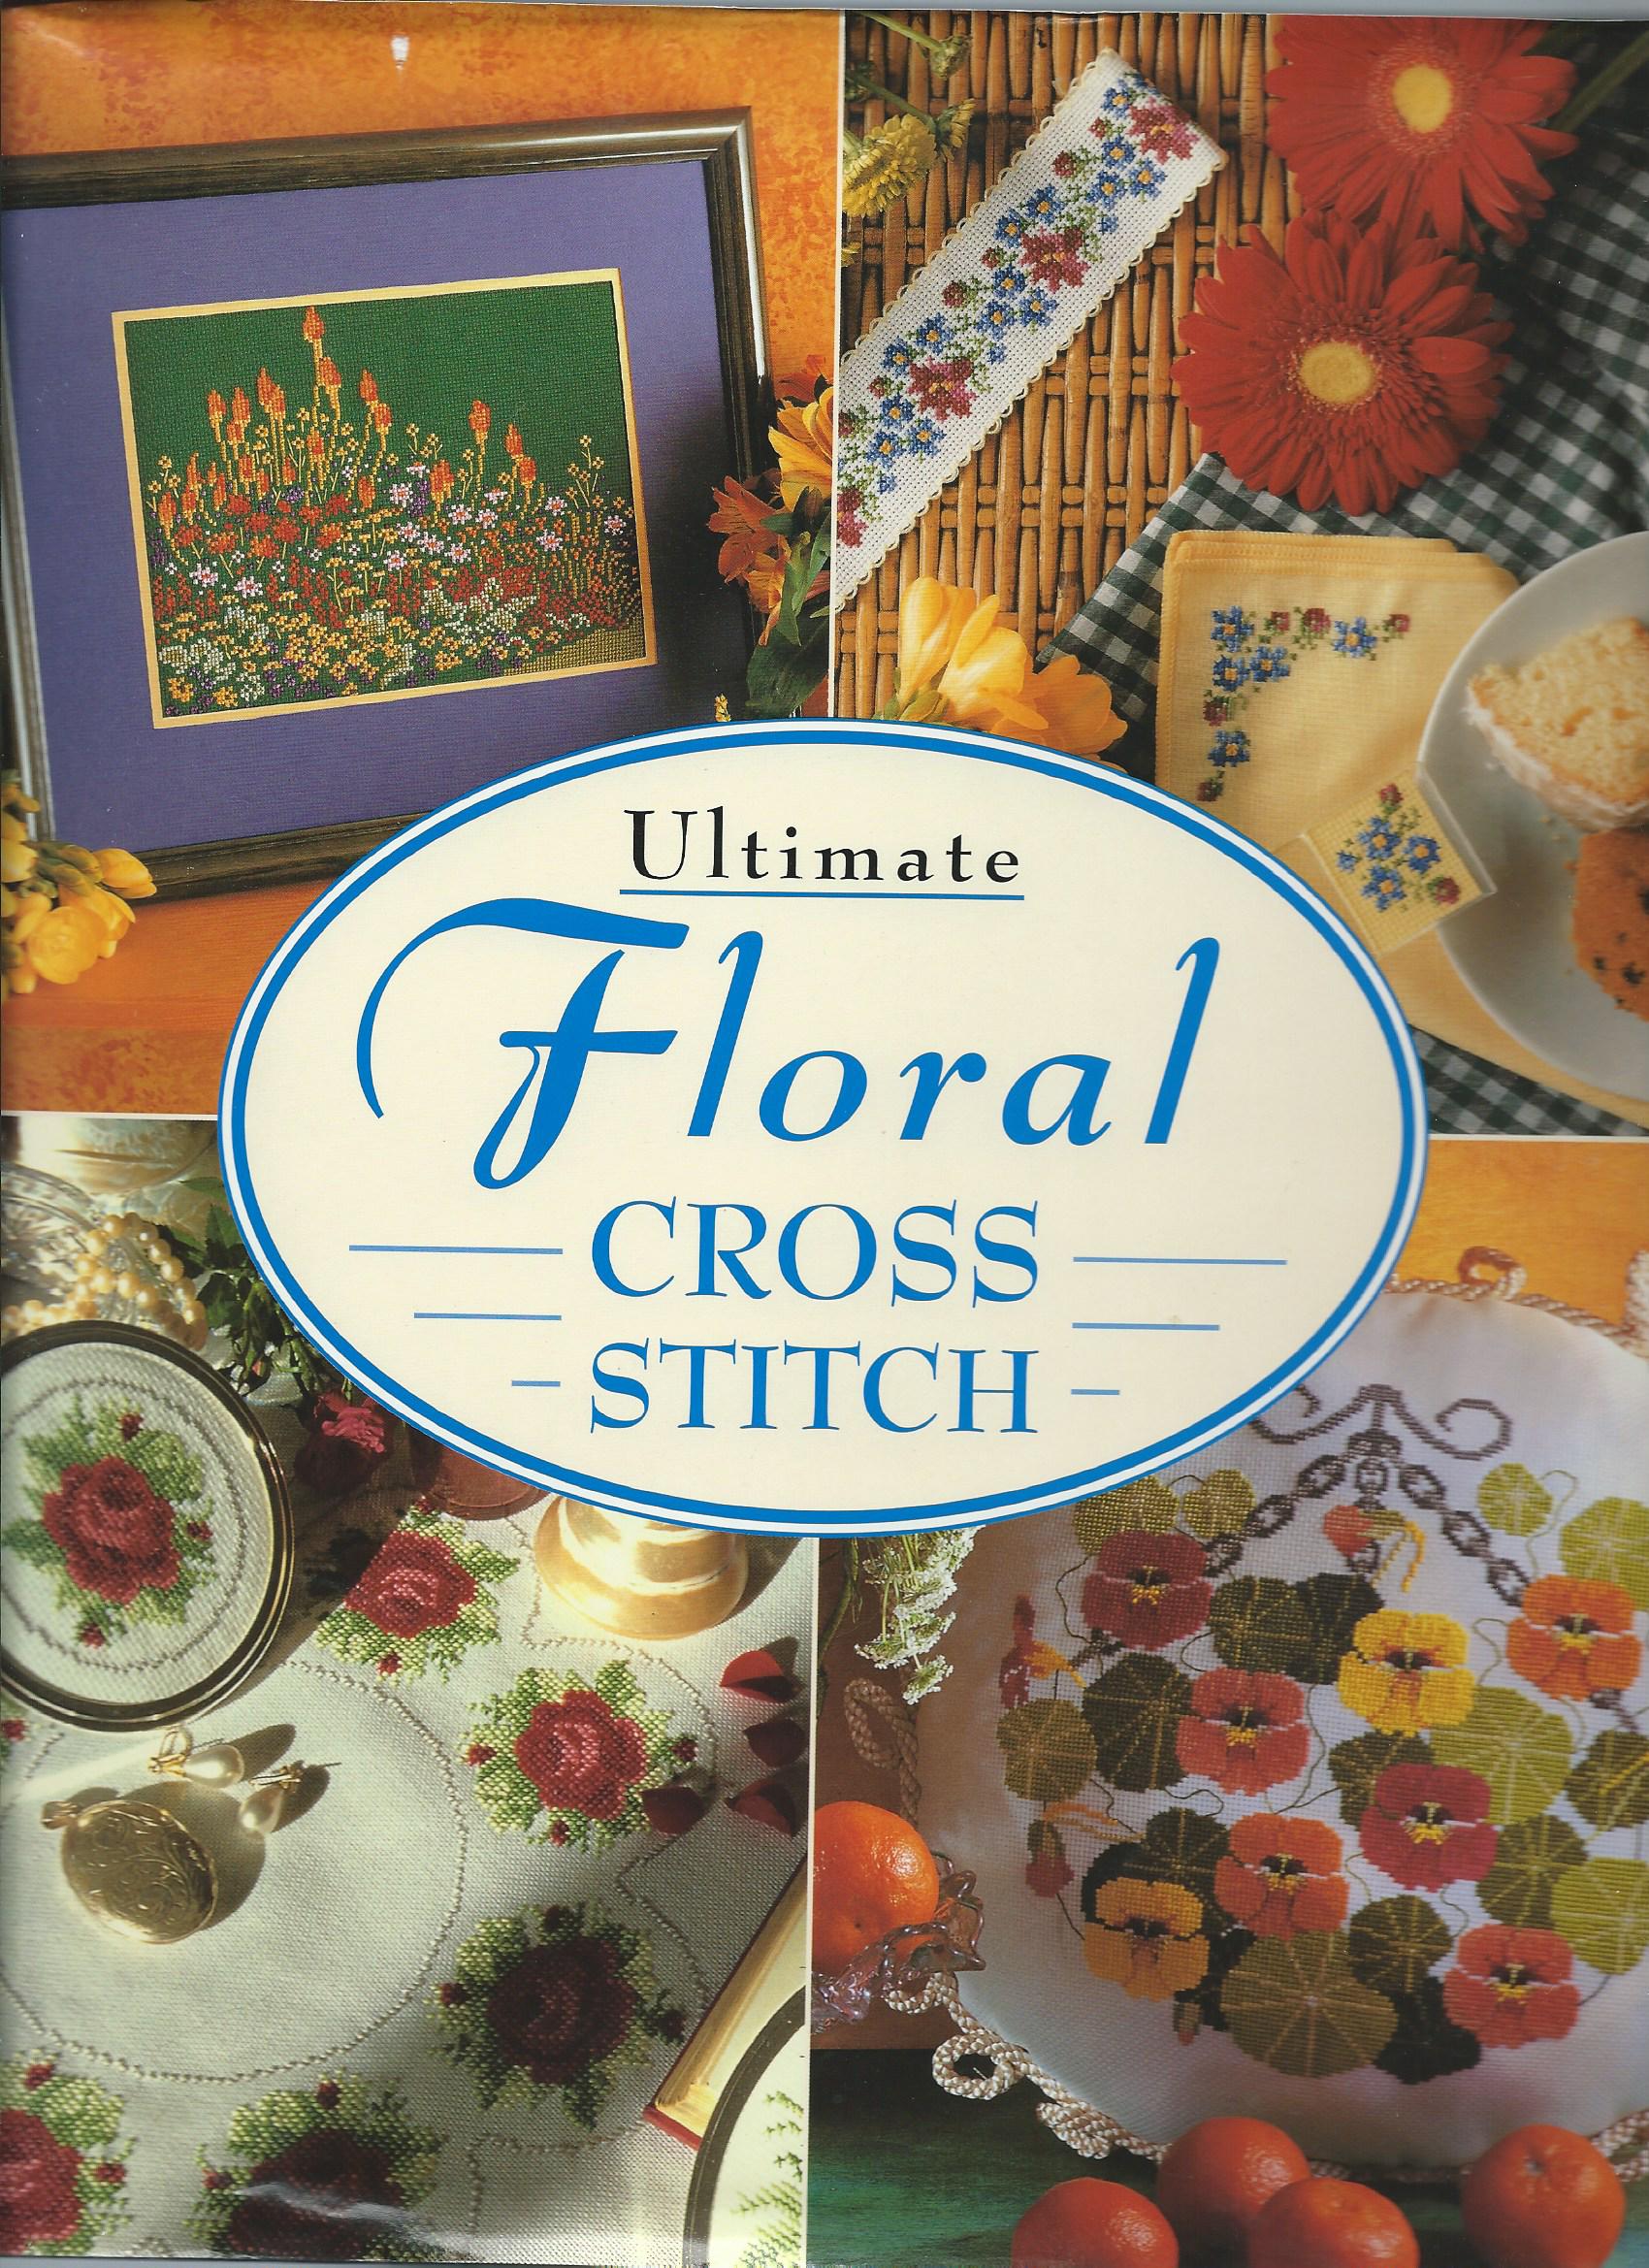 Ultimate Floral Cross stitch